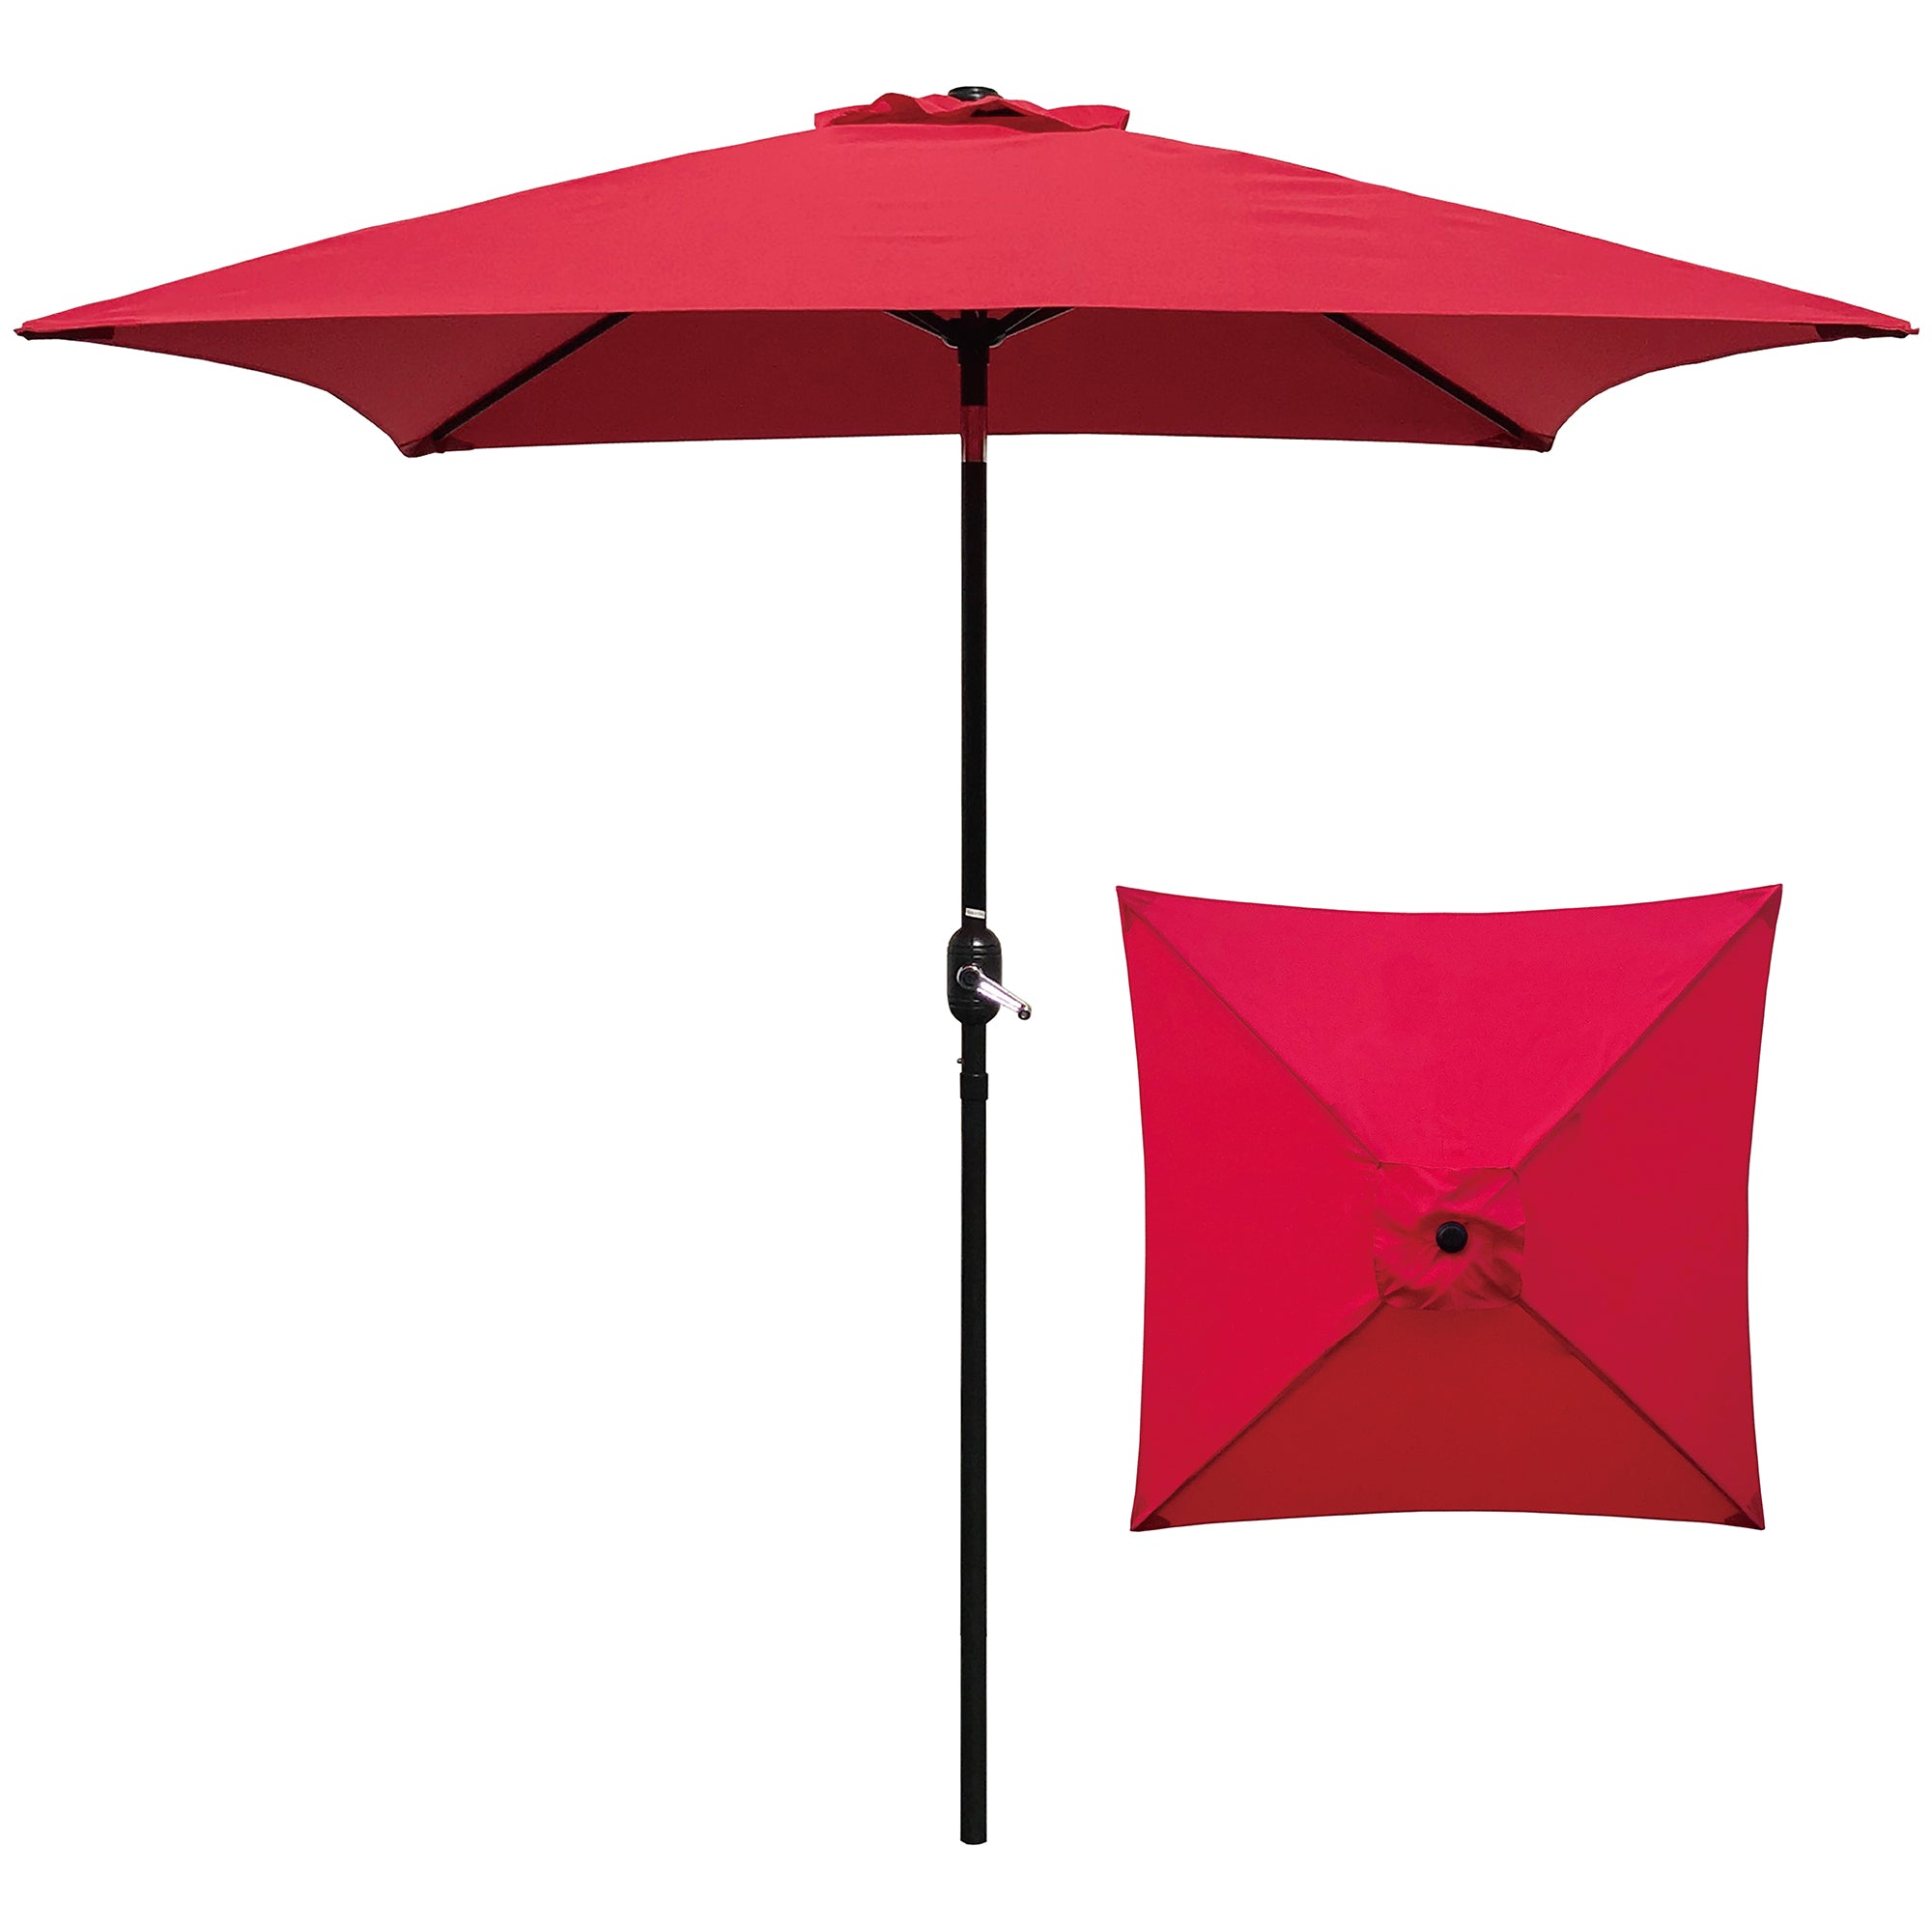 Davee  6.5' Square Patio Umbrella Outdoor Table Market Umbrella with Tilt/Crank, 4 Ribs (Red)